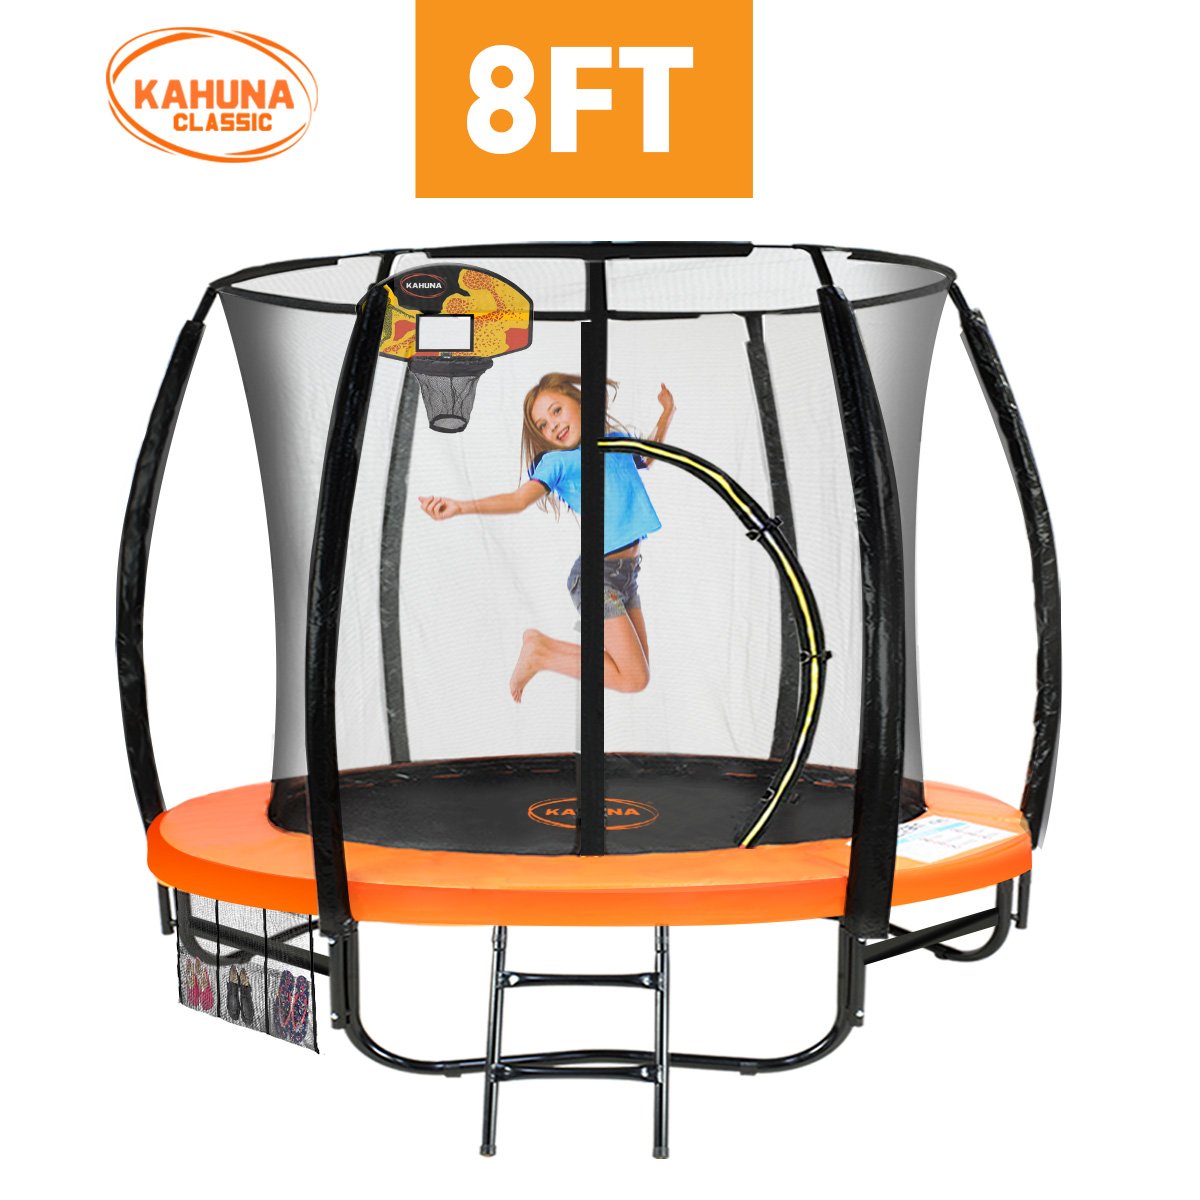 Kahuna Trampoline 8ft with Basketball Set - Orange